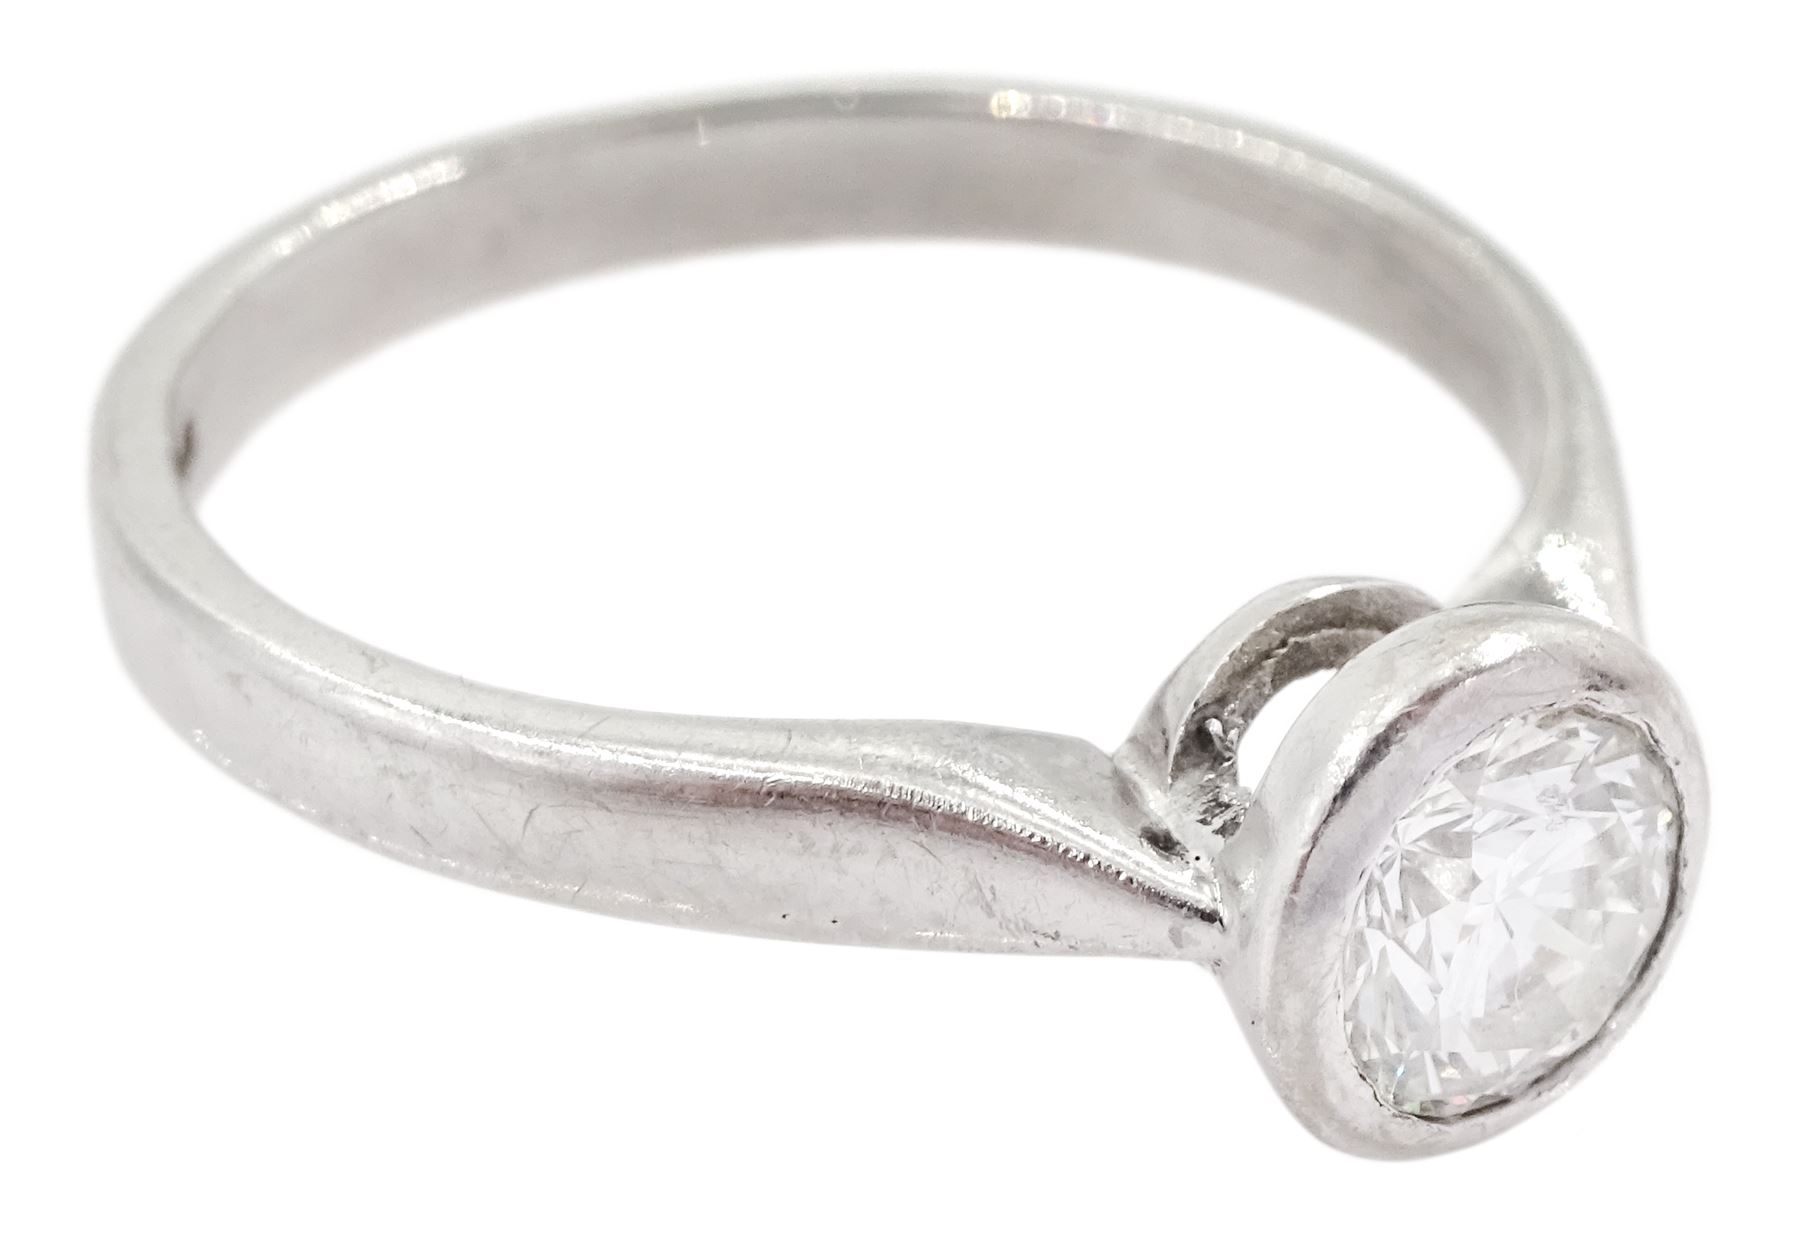 18ct gold bezel set single stone round brilliant cut diamond ring - Image 2 of 4